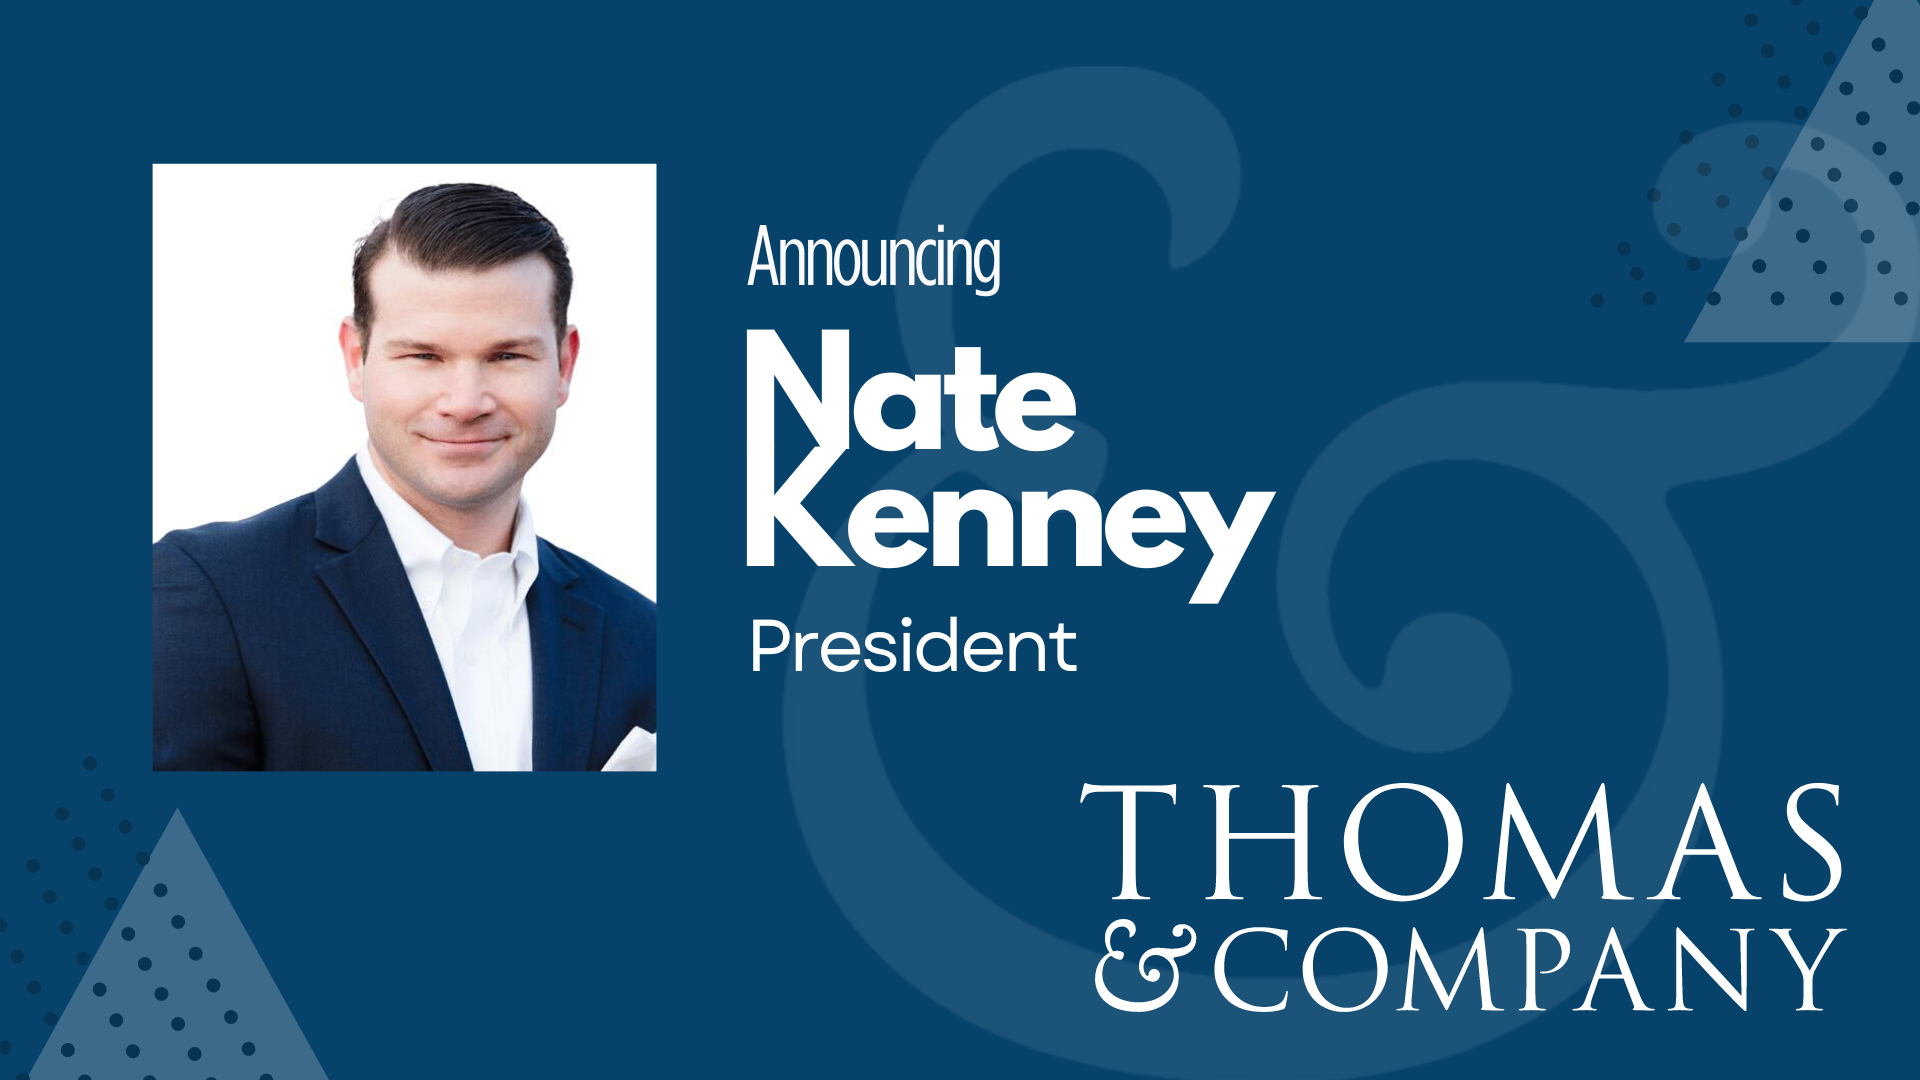 Thomas & Company Announces Nate Kenney as President – Thomas & Company